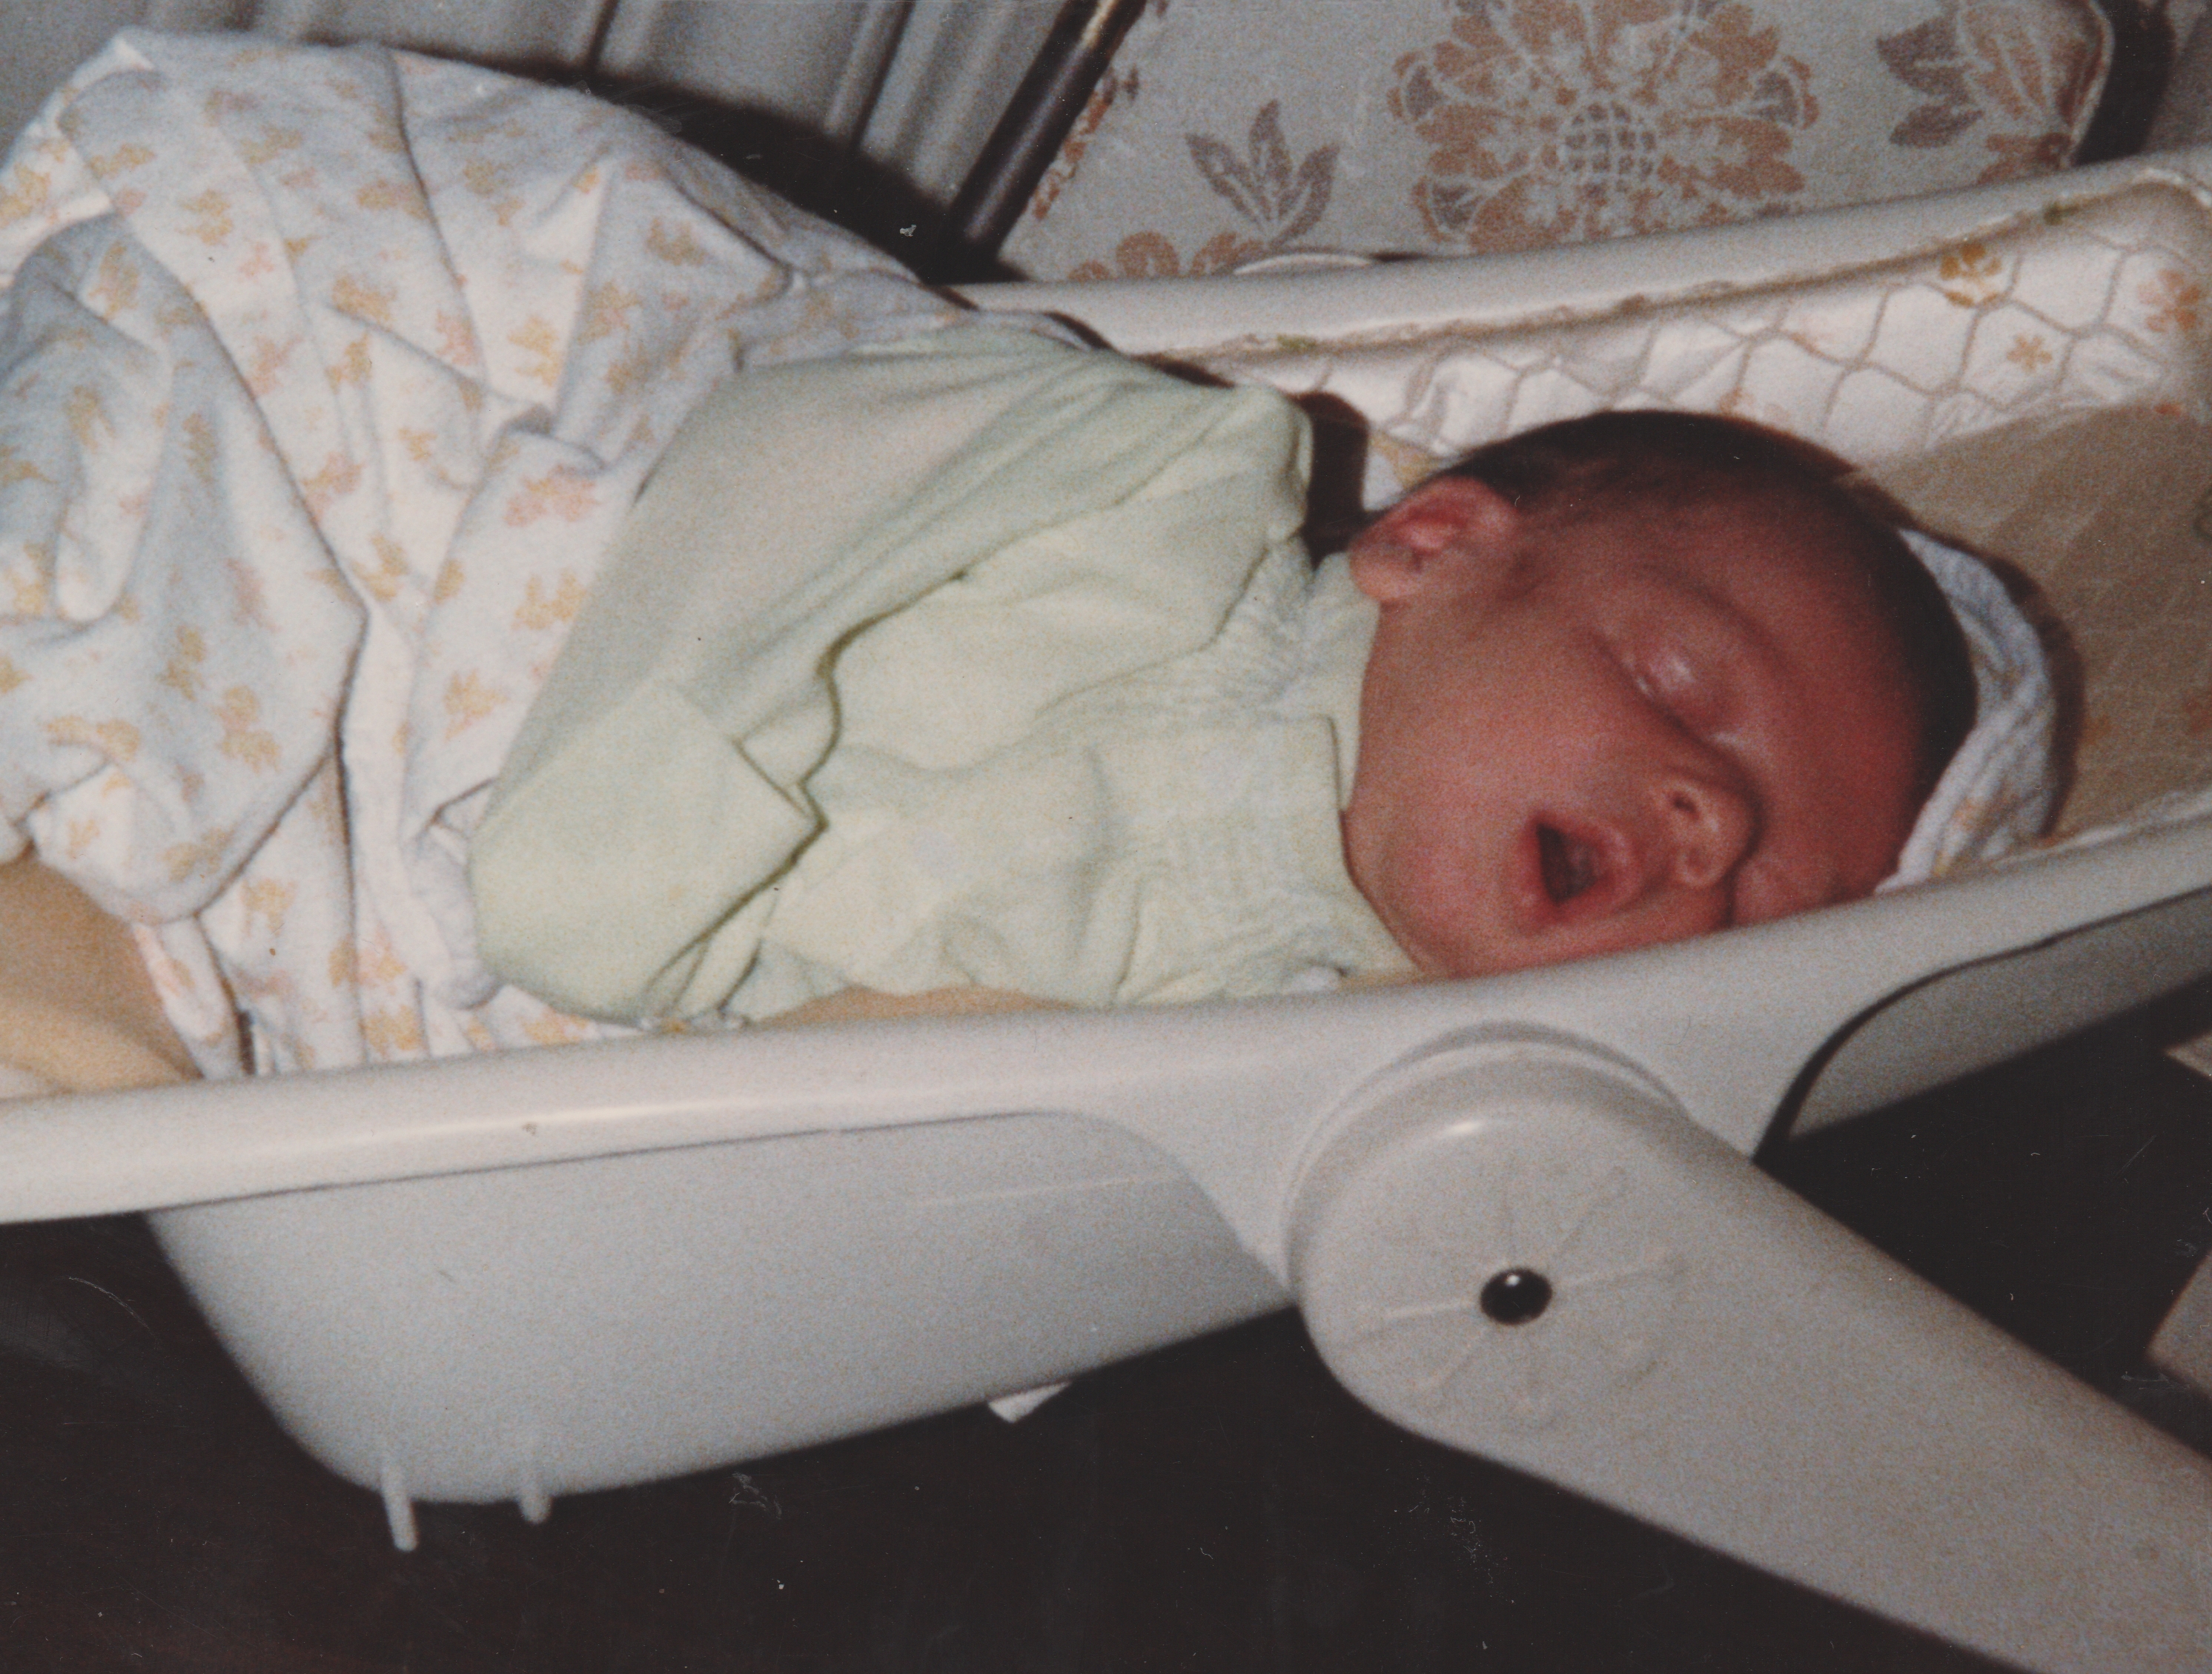 1982 apx - Baby Rick - White Small Crib, Sleep, Breath. Light Green.jpg